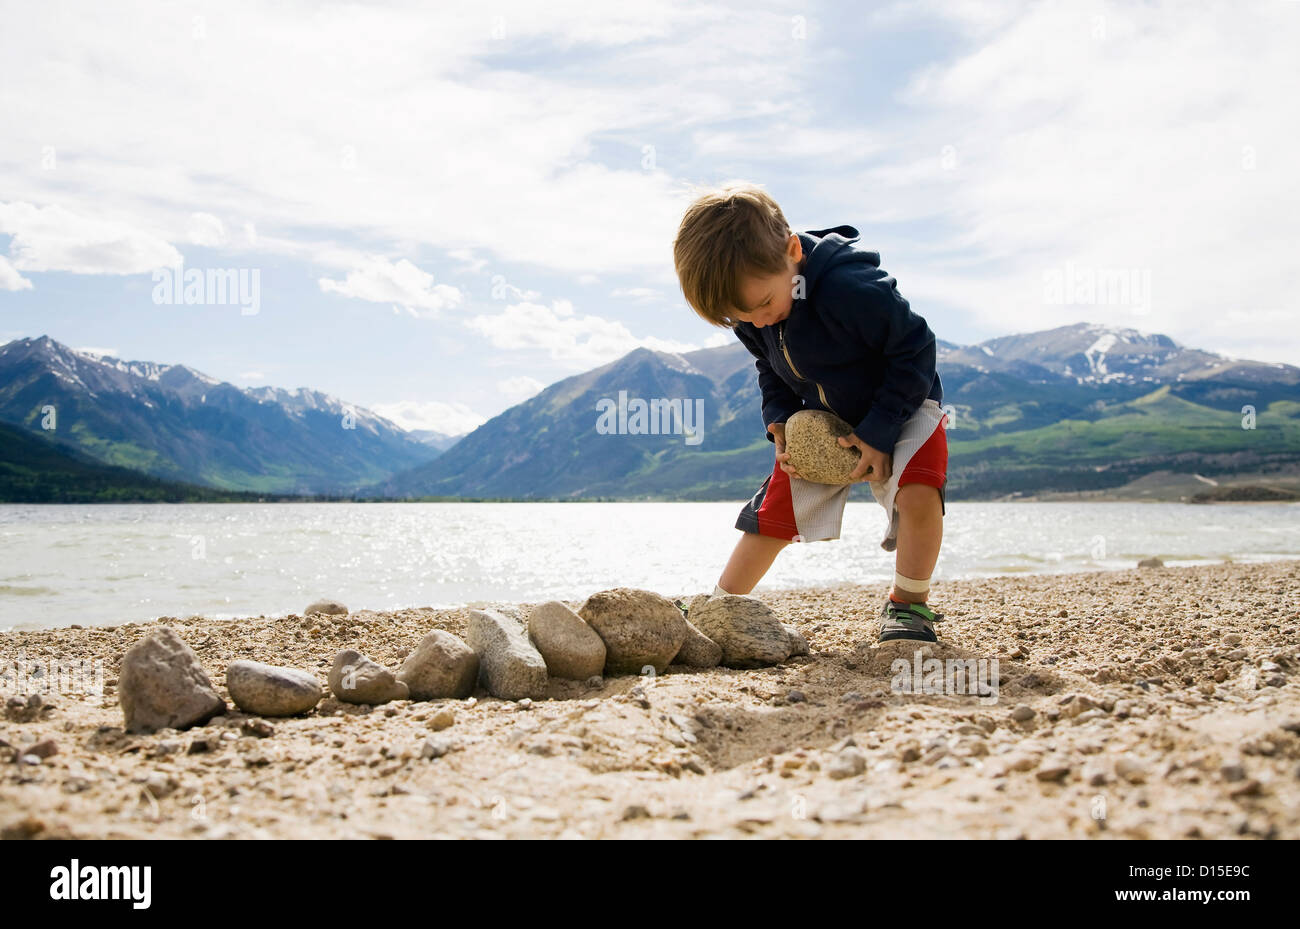 USA, Colorado, Boy (2-3) with rocks on beach Stock Photo